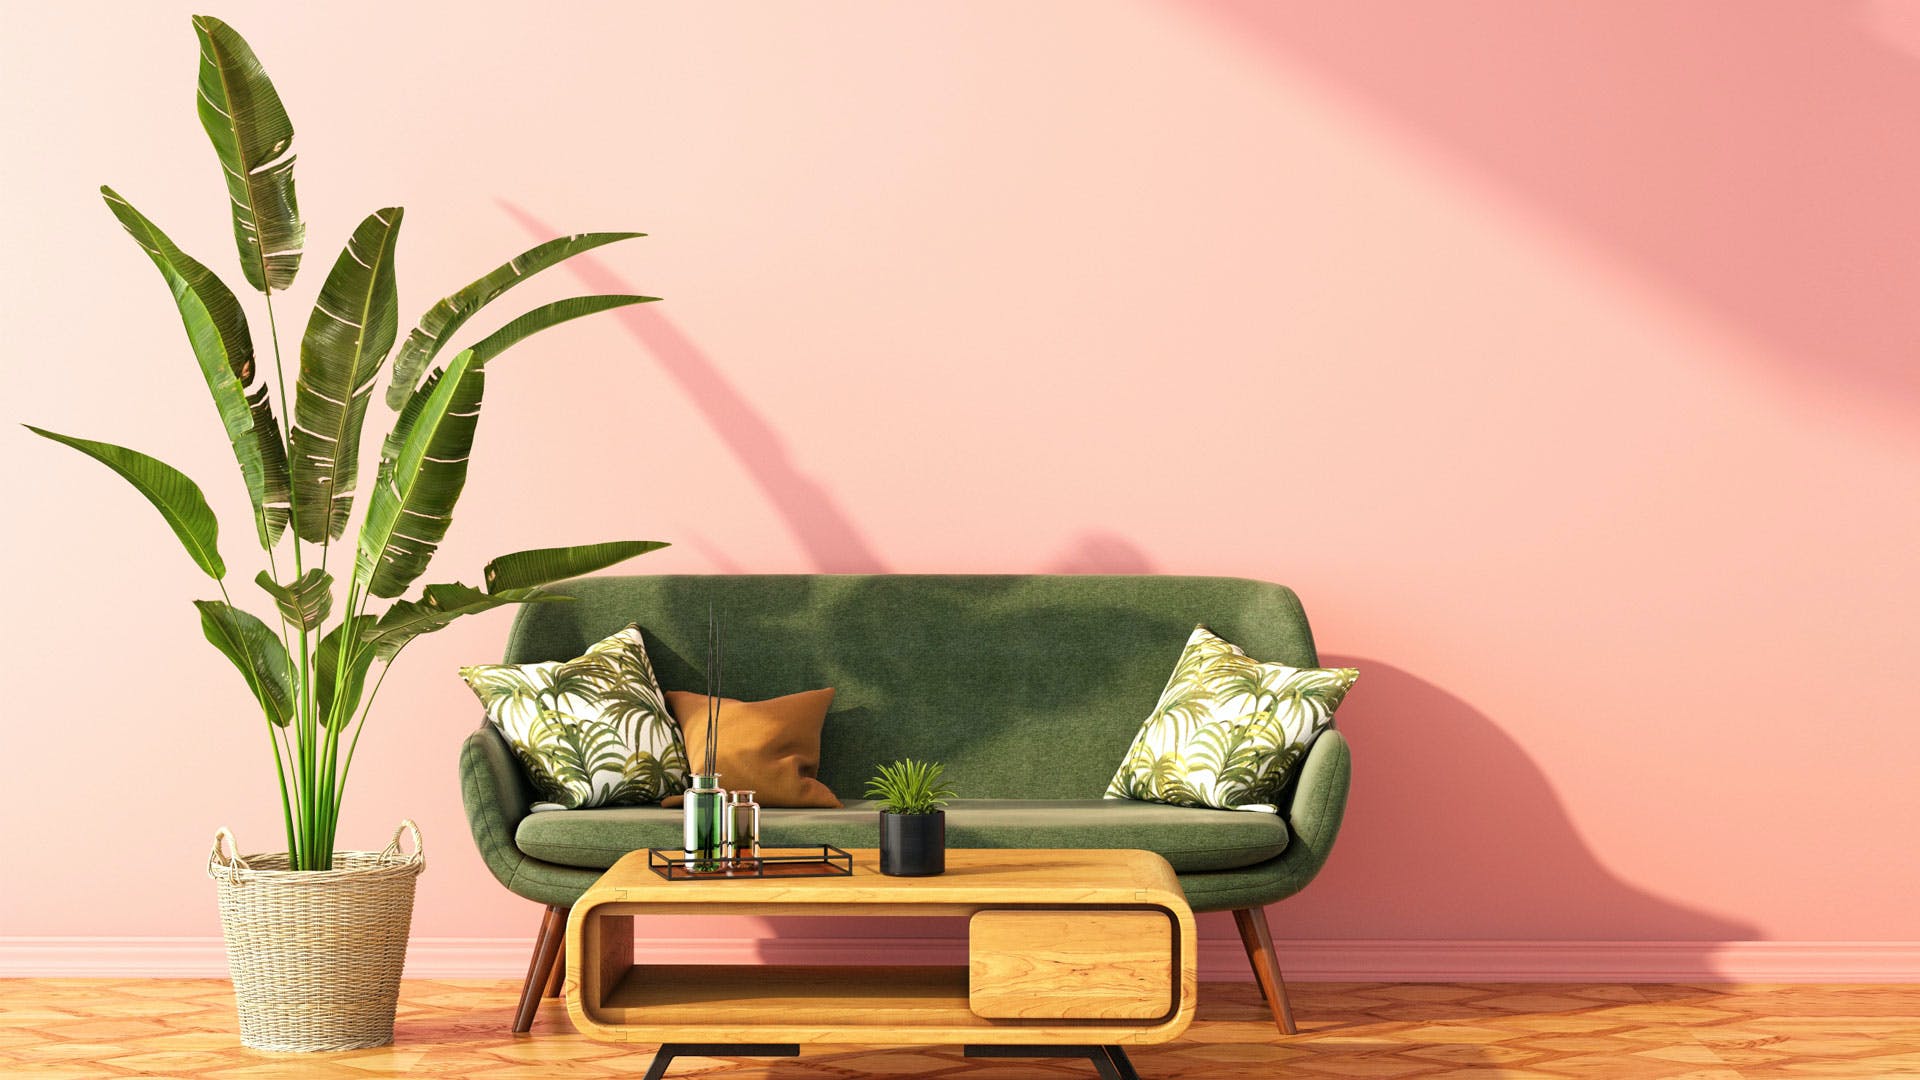 Green,Houseplant,Furniture,Couch,Living room,Room,Interior design,Plant,Wallpaper,Design